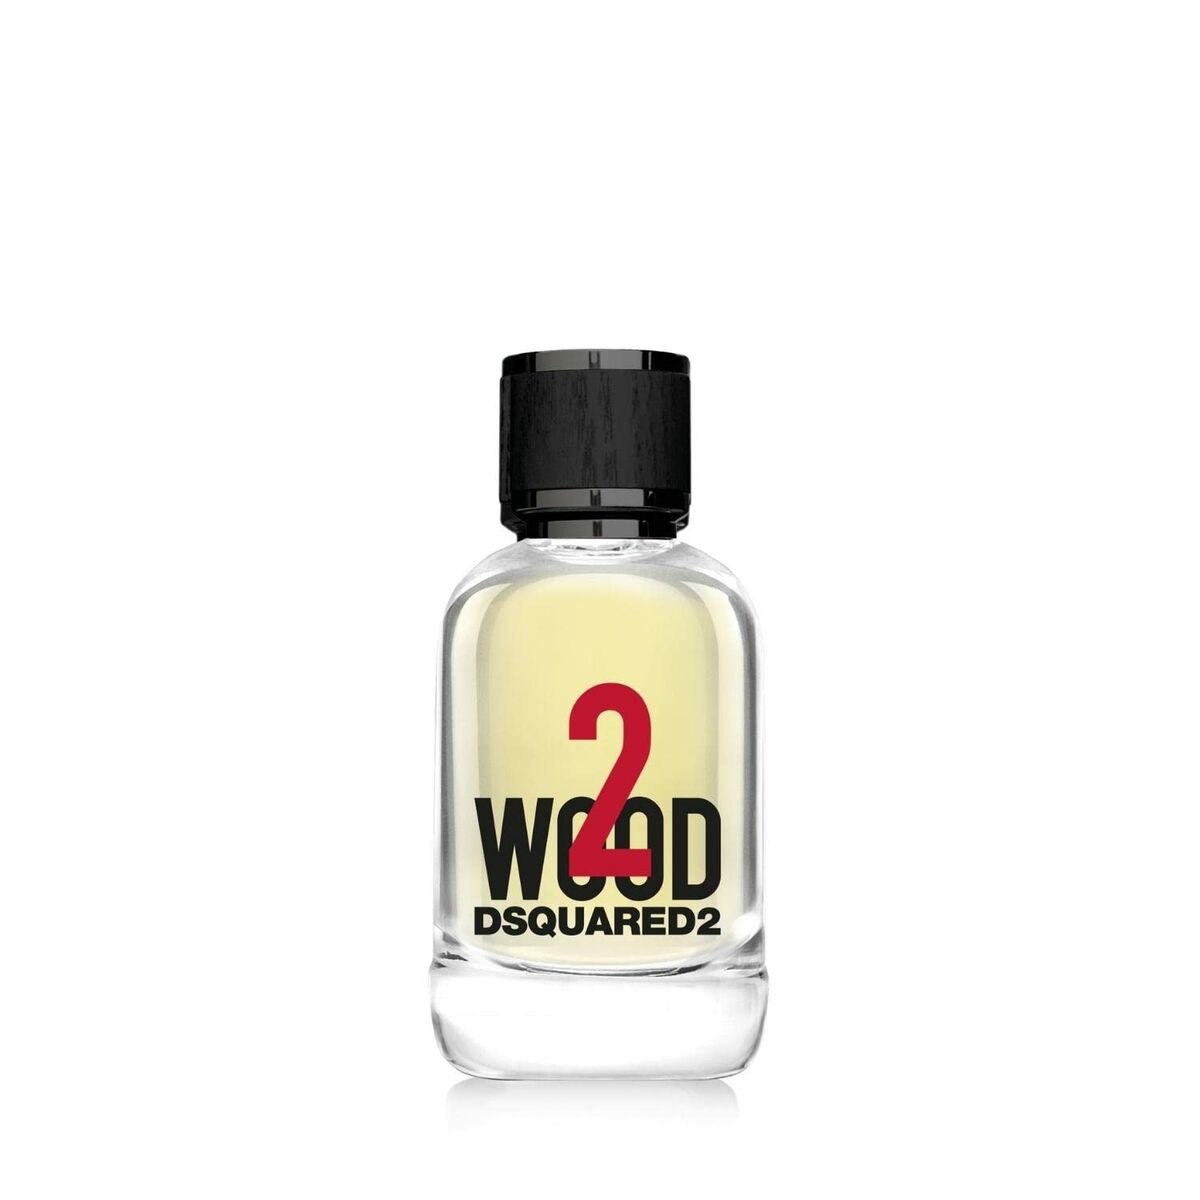 Perfume Unisex Dsquared2 EDT 2 Wood 50 ml